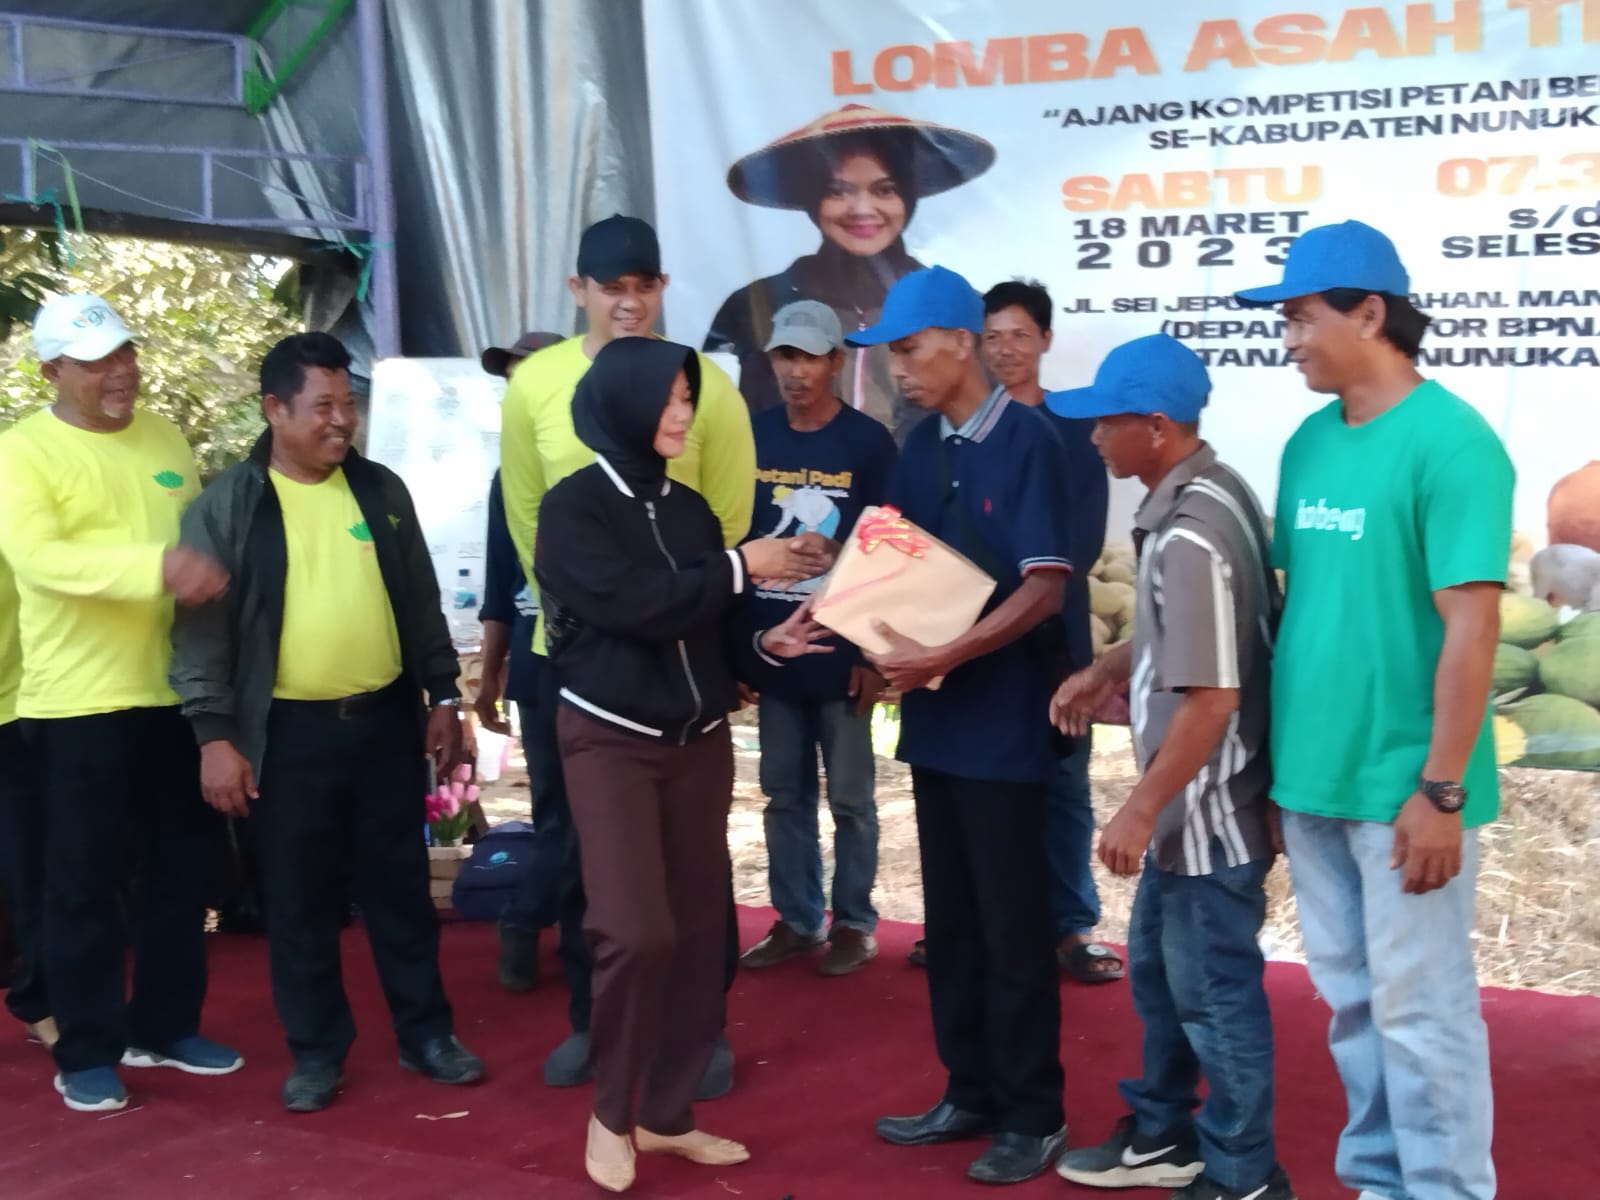 tim wilayah BPP Kecamatan Nunukan, Agus Leppang (Poktan Buntu Pepasan, P4S Bukit Kapur Indah, Petani Milenial), Yohannis Tumampa (Tunas Hijau Mandiri) dan Niko berhasil meraih juara II.